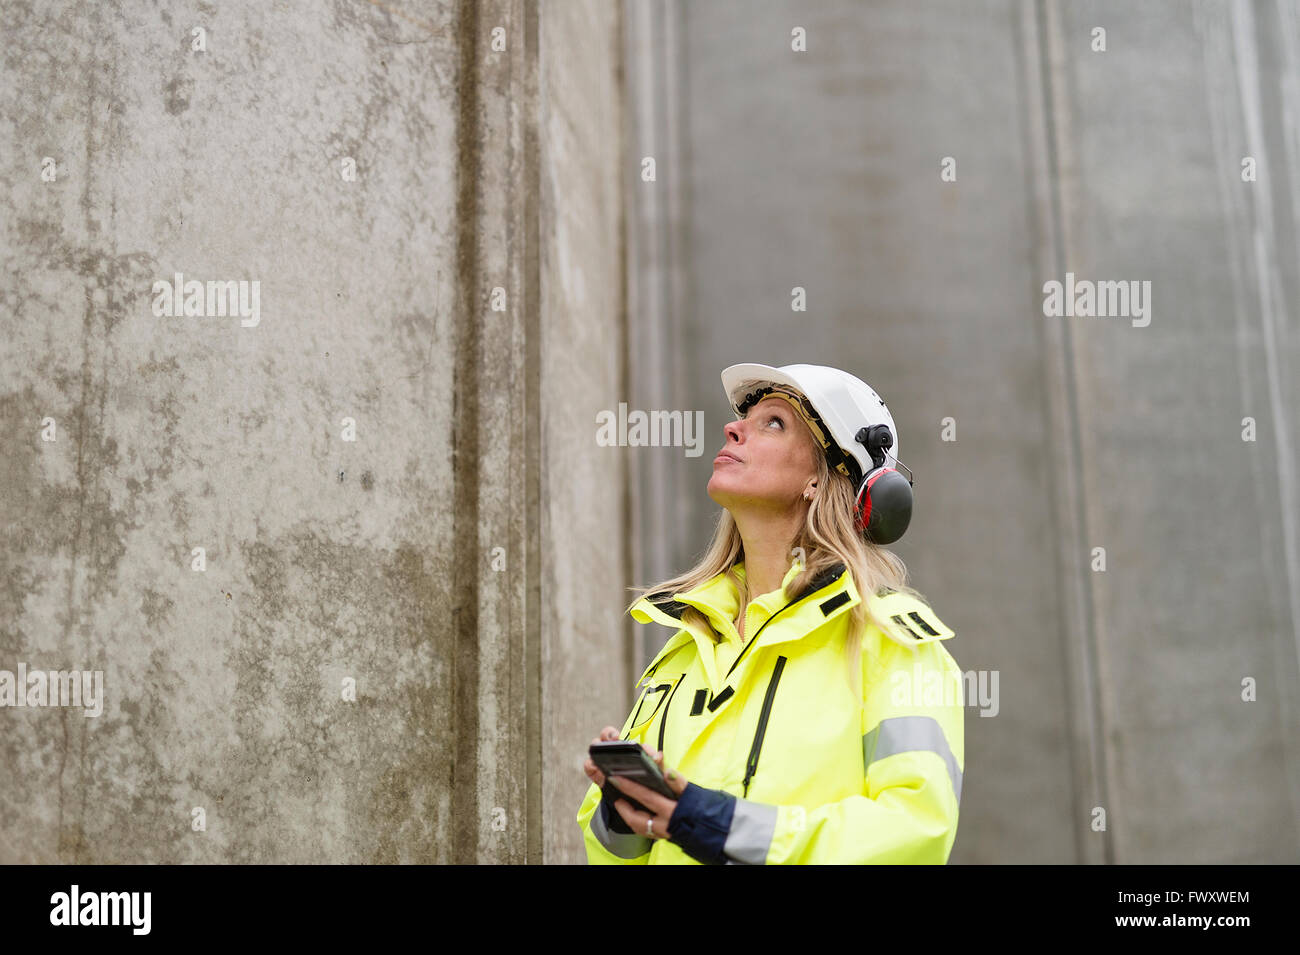 Sweden, Vastmanland, Engineer working at construction site Stock Photo